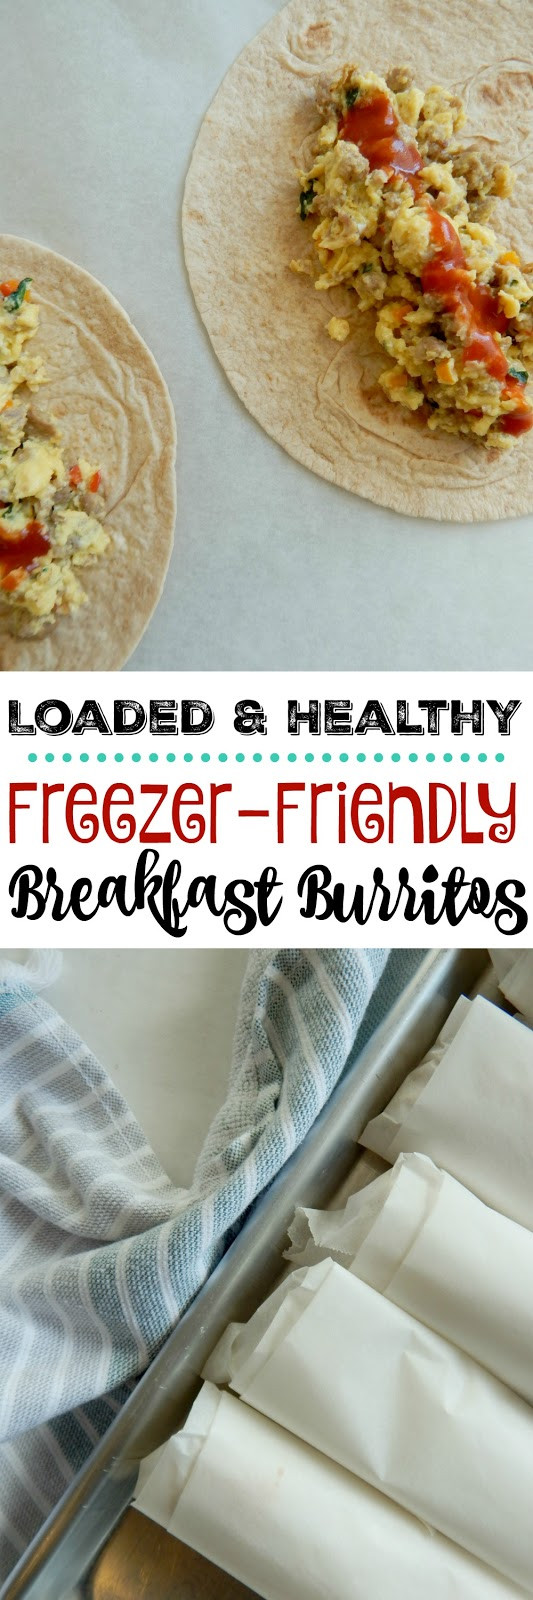 Healthy Breakfast Burrito Freezer
 LOAD HEALTHY FREEZER FRIENDLY BREAKFAST BURRITOS